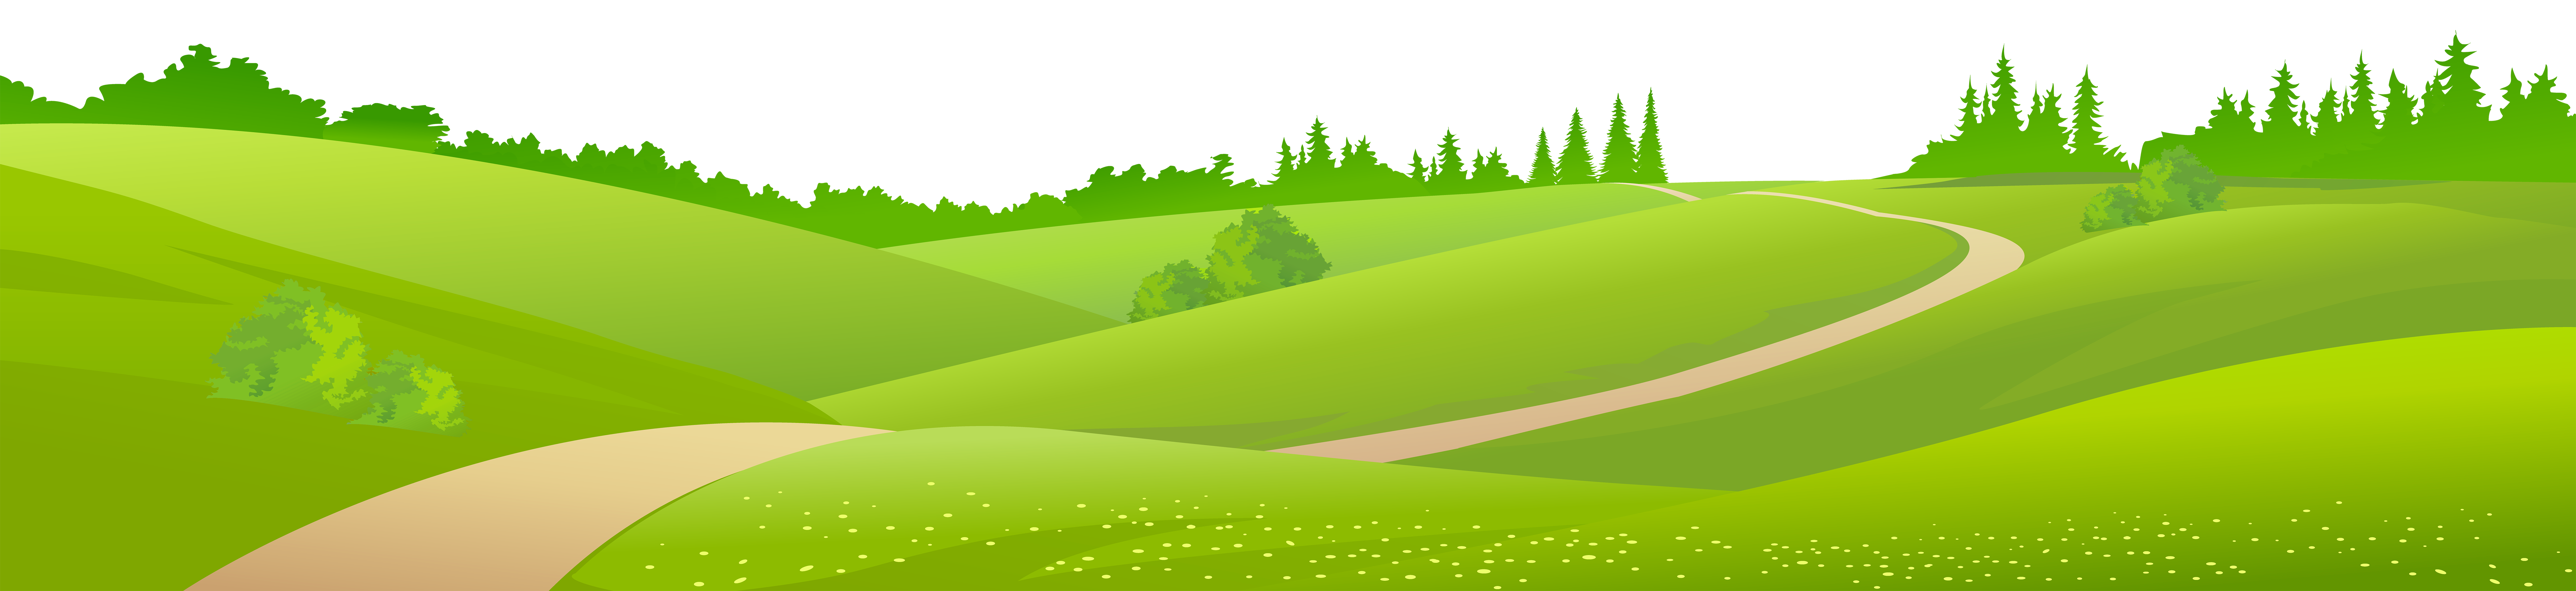 Landscaping Download PNG Image